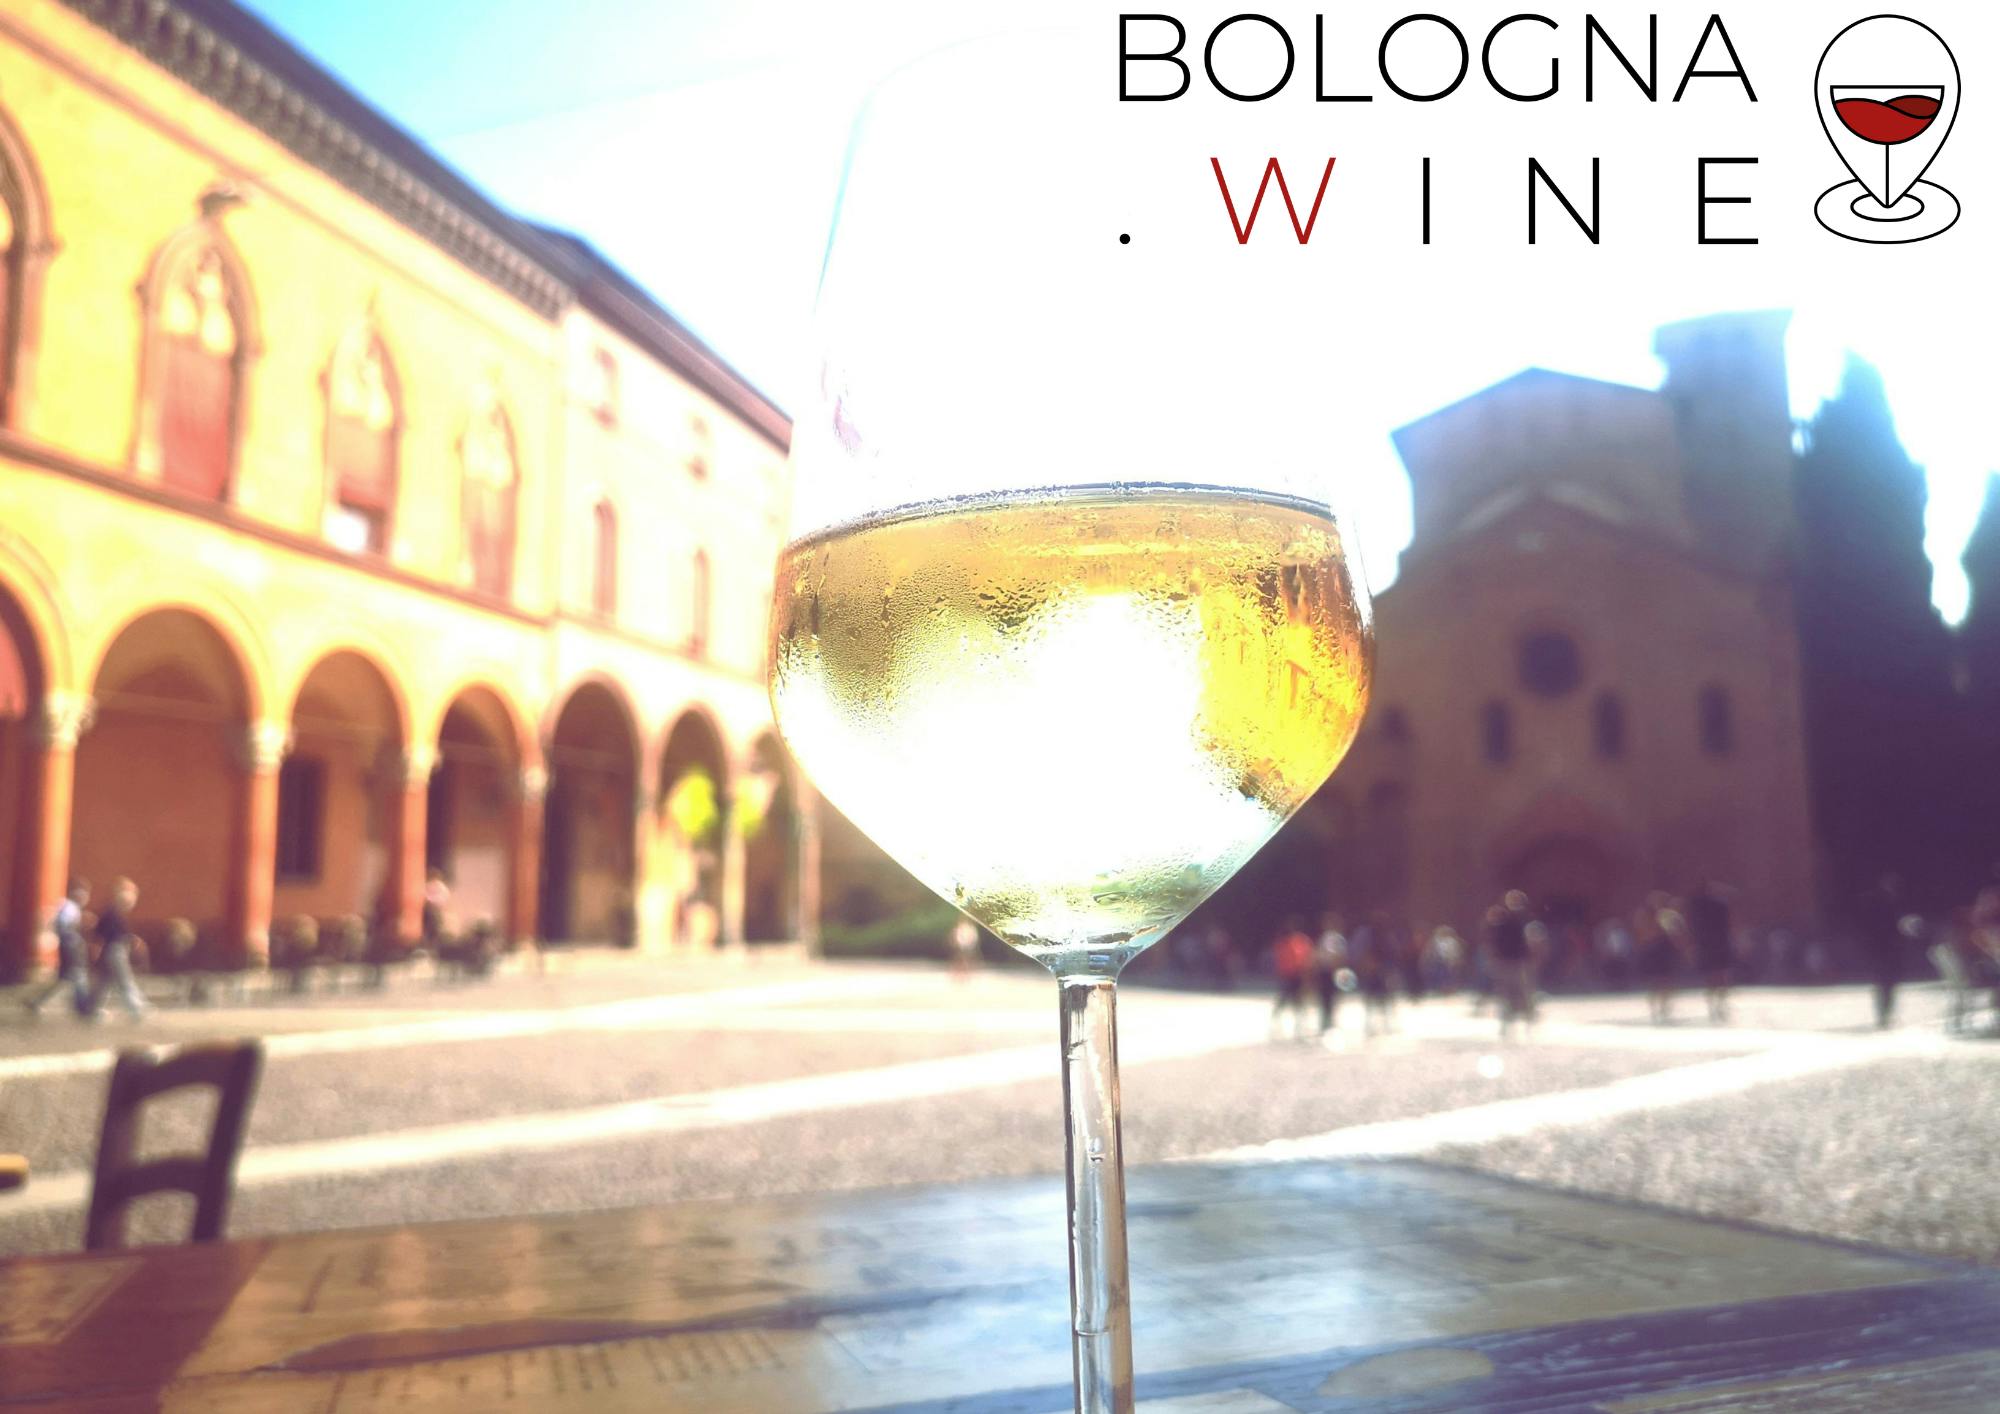 Zweistündige Weinwanderung durch Bologna